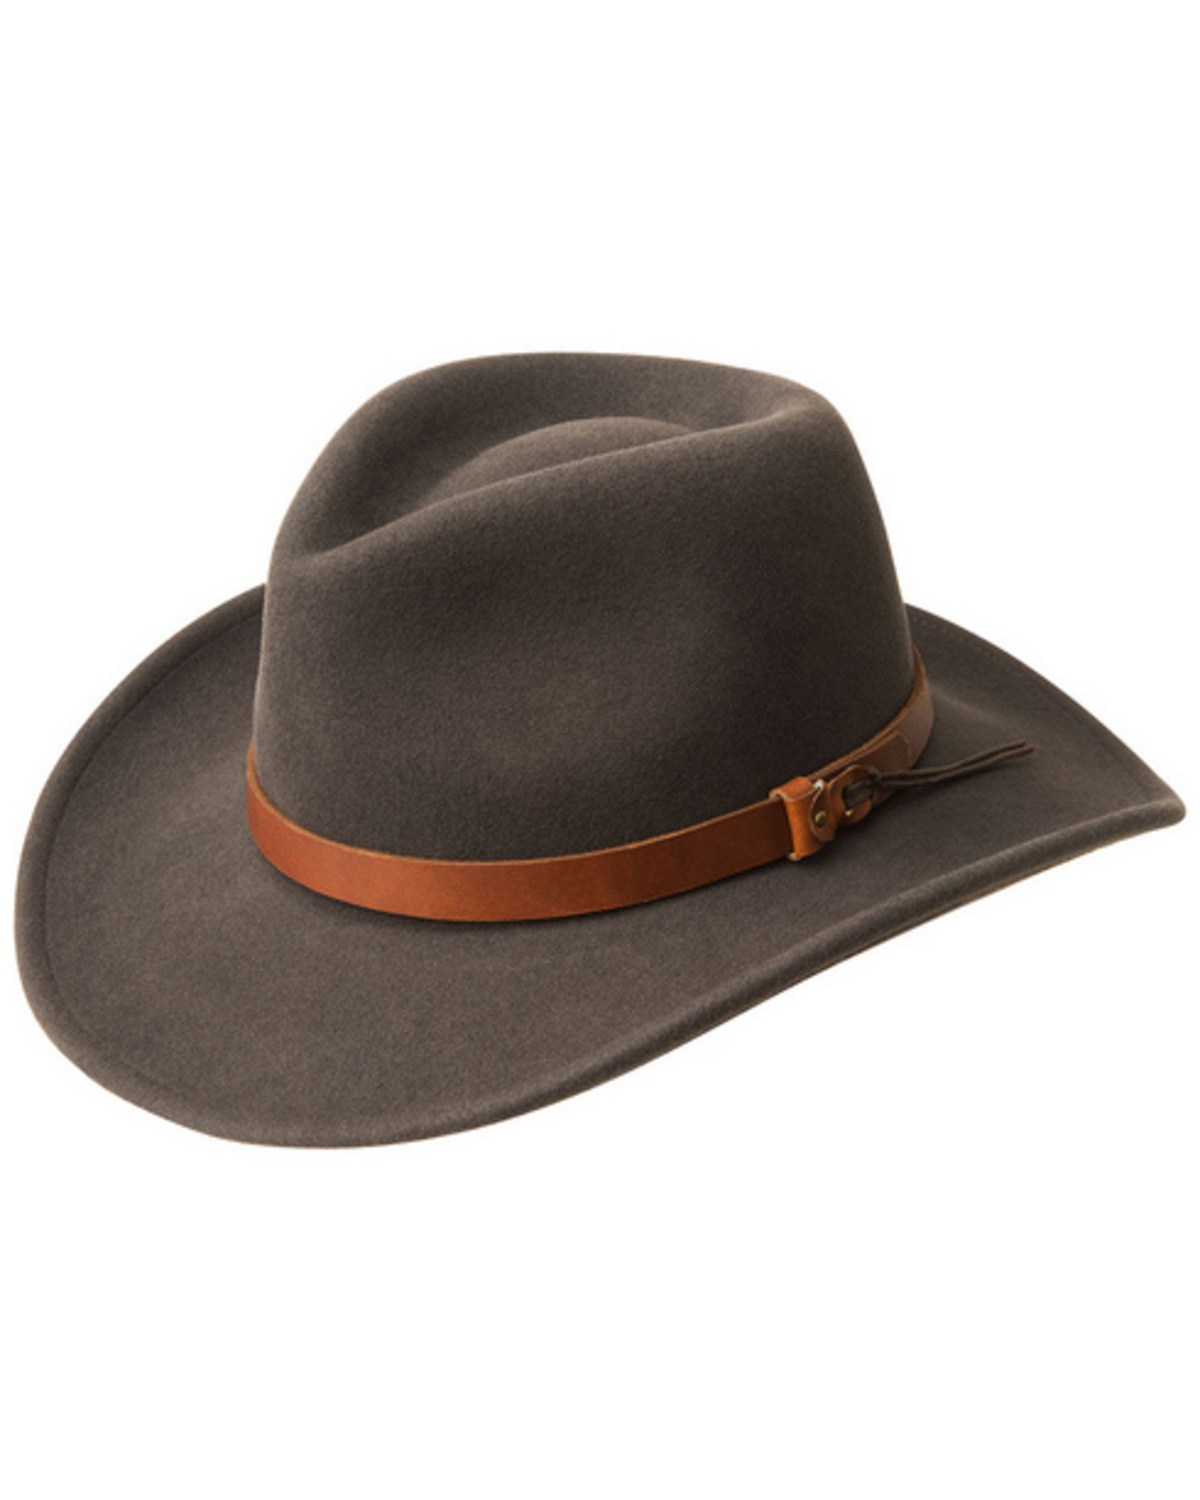 Bailey Men's Caliber Wool Felt Outback Hat